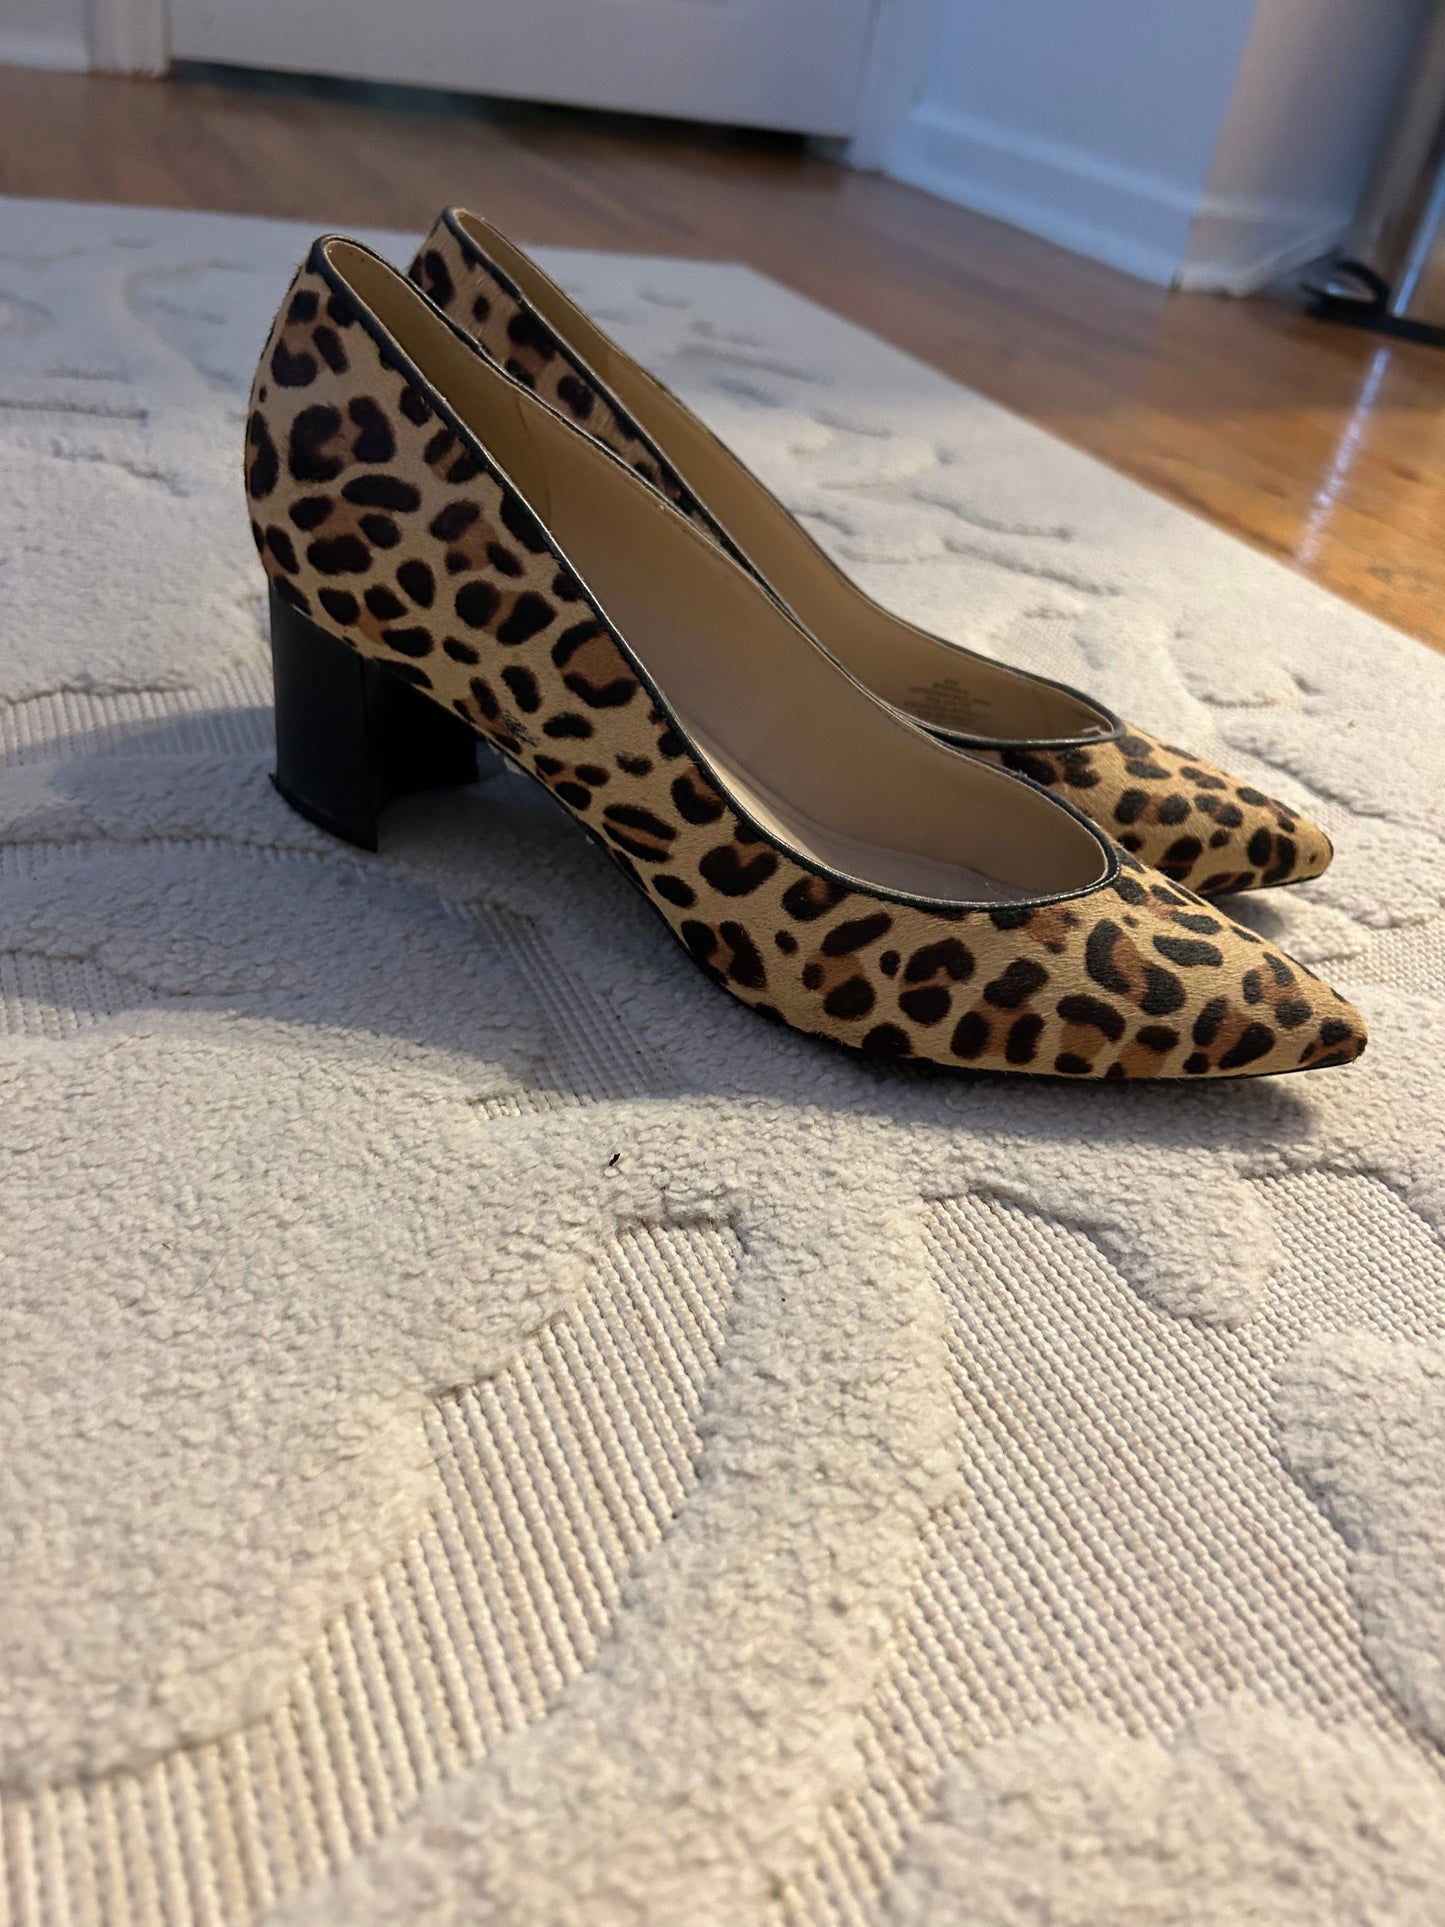 Mark Fisher Cheetah Heels Size 8